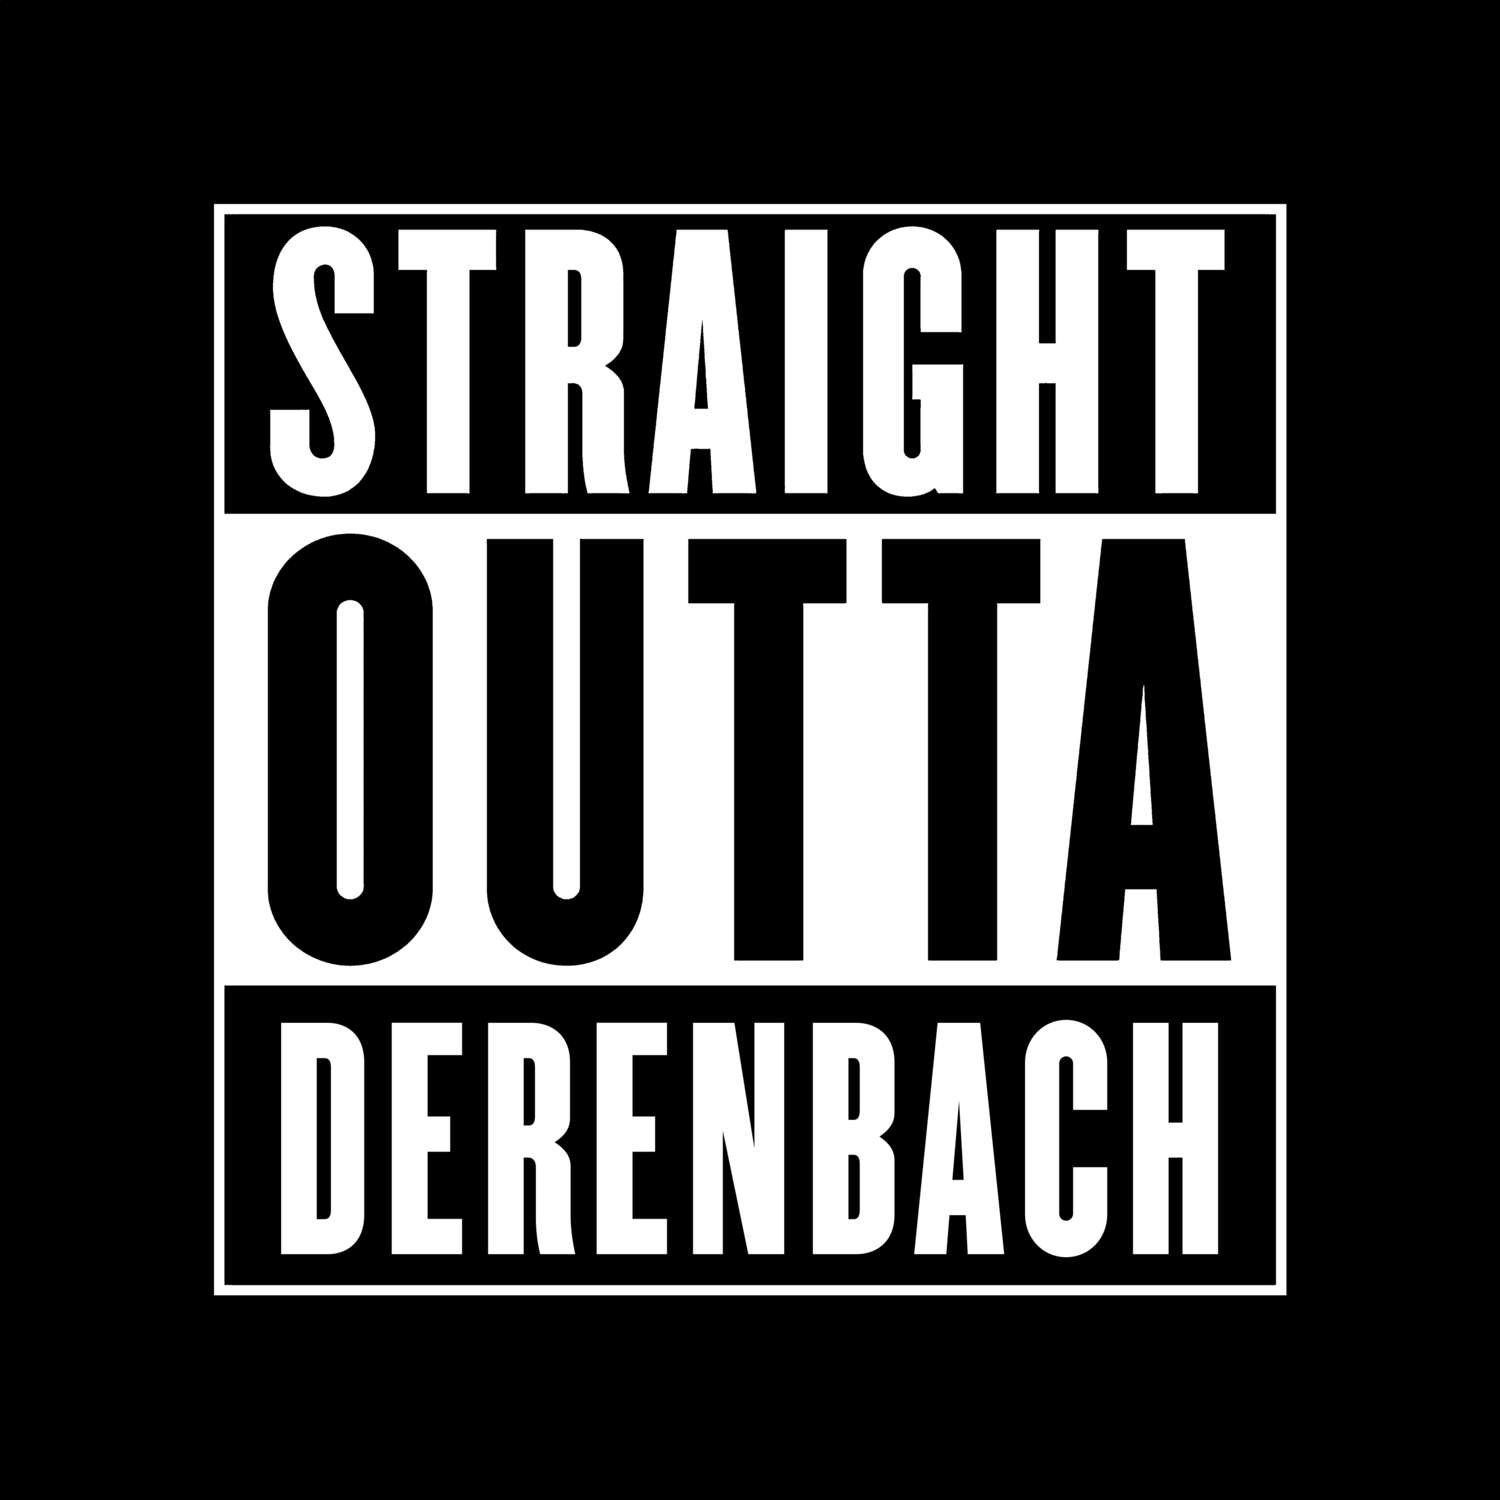 Derenbach T-Shirt »Straight Outta«